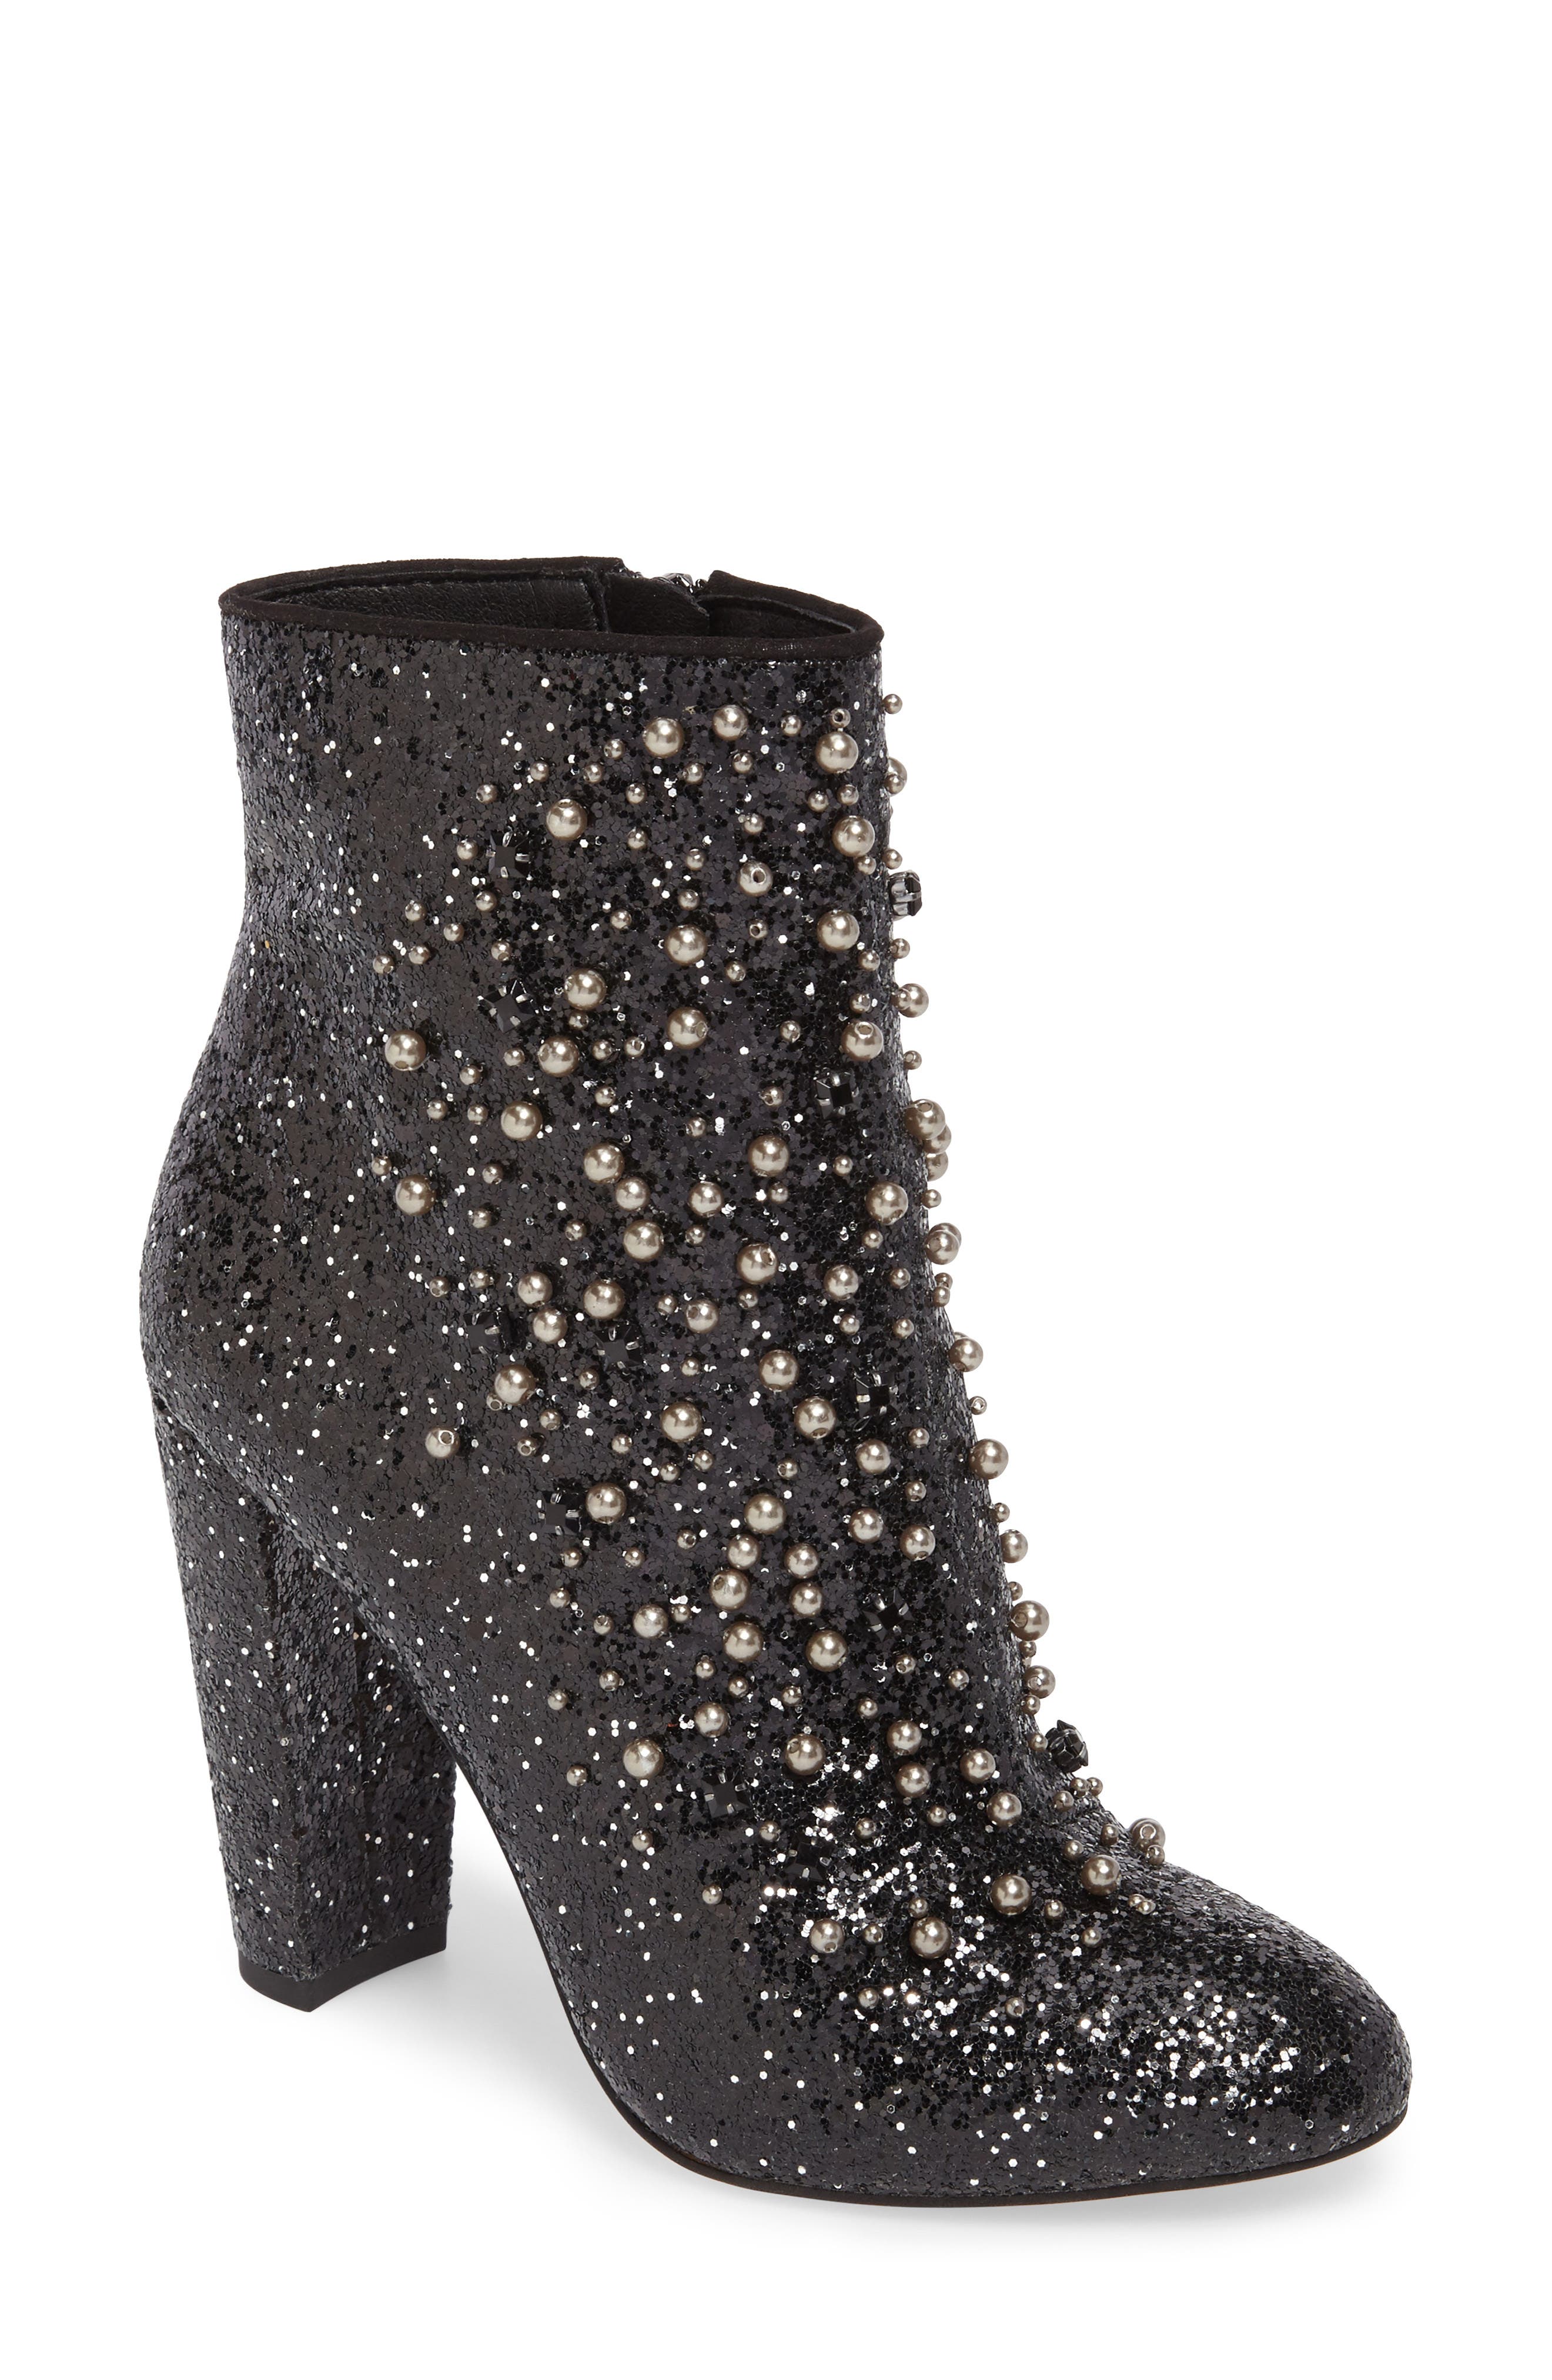 jessica simpson sparkly boots